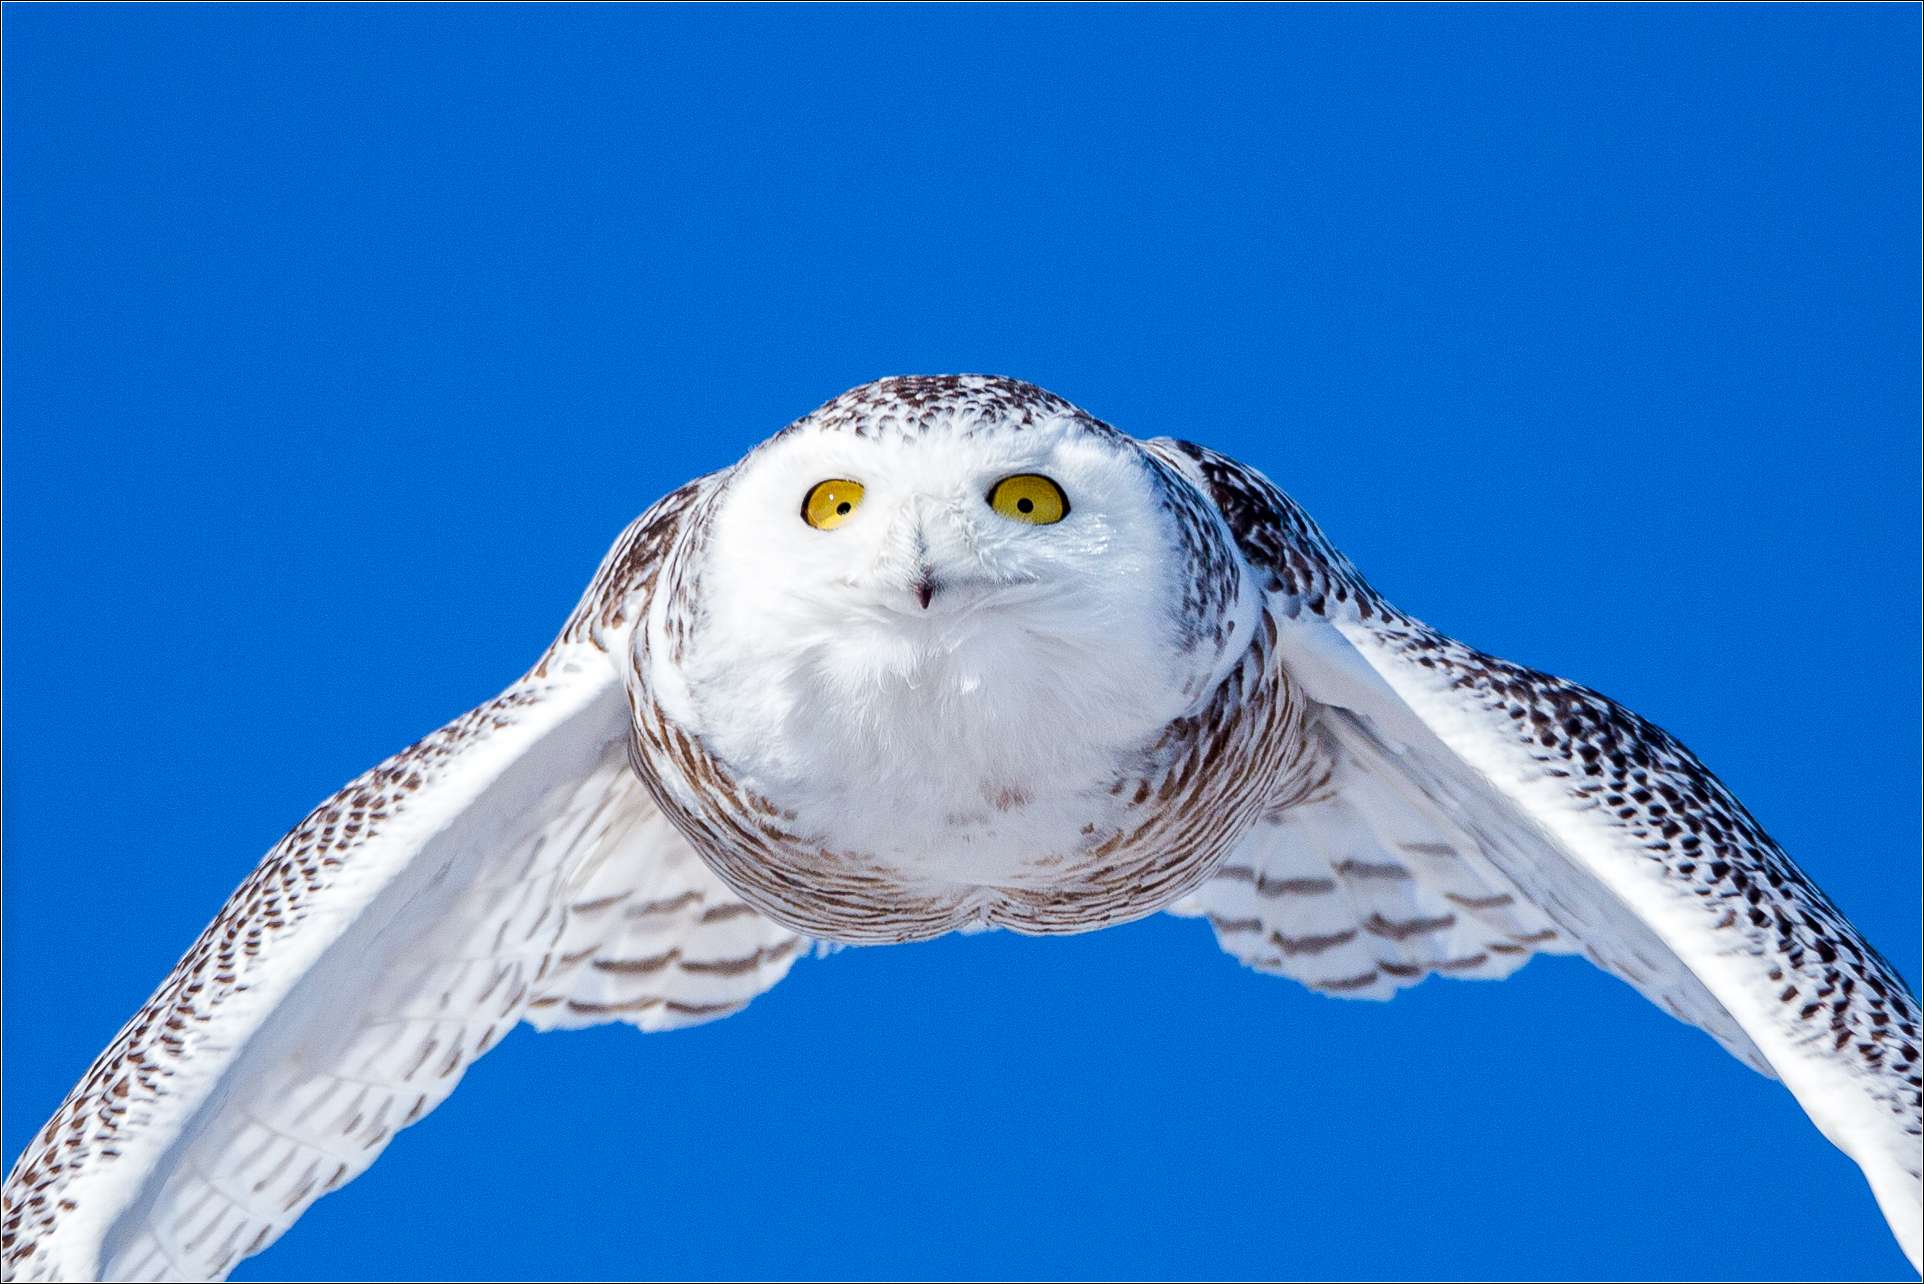 Snowy Owl With Blue Eyes Flying